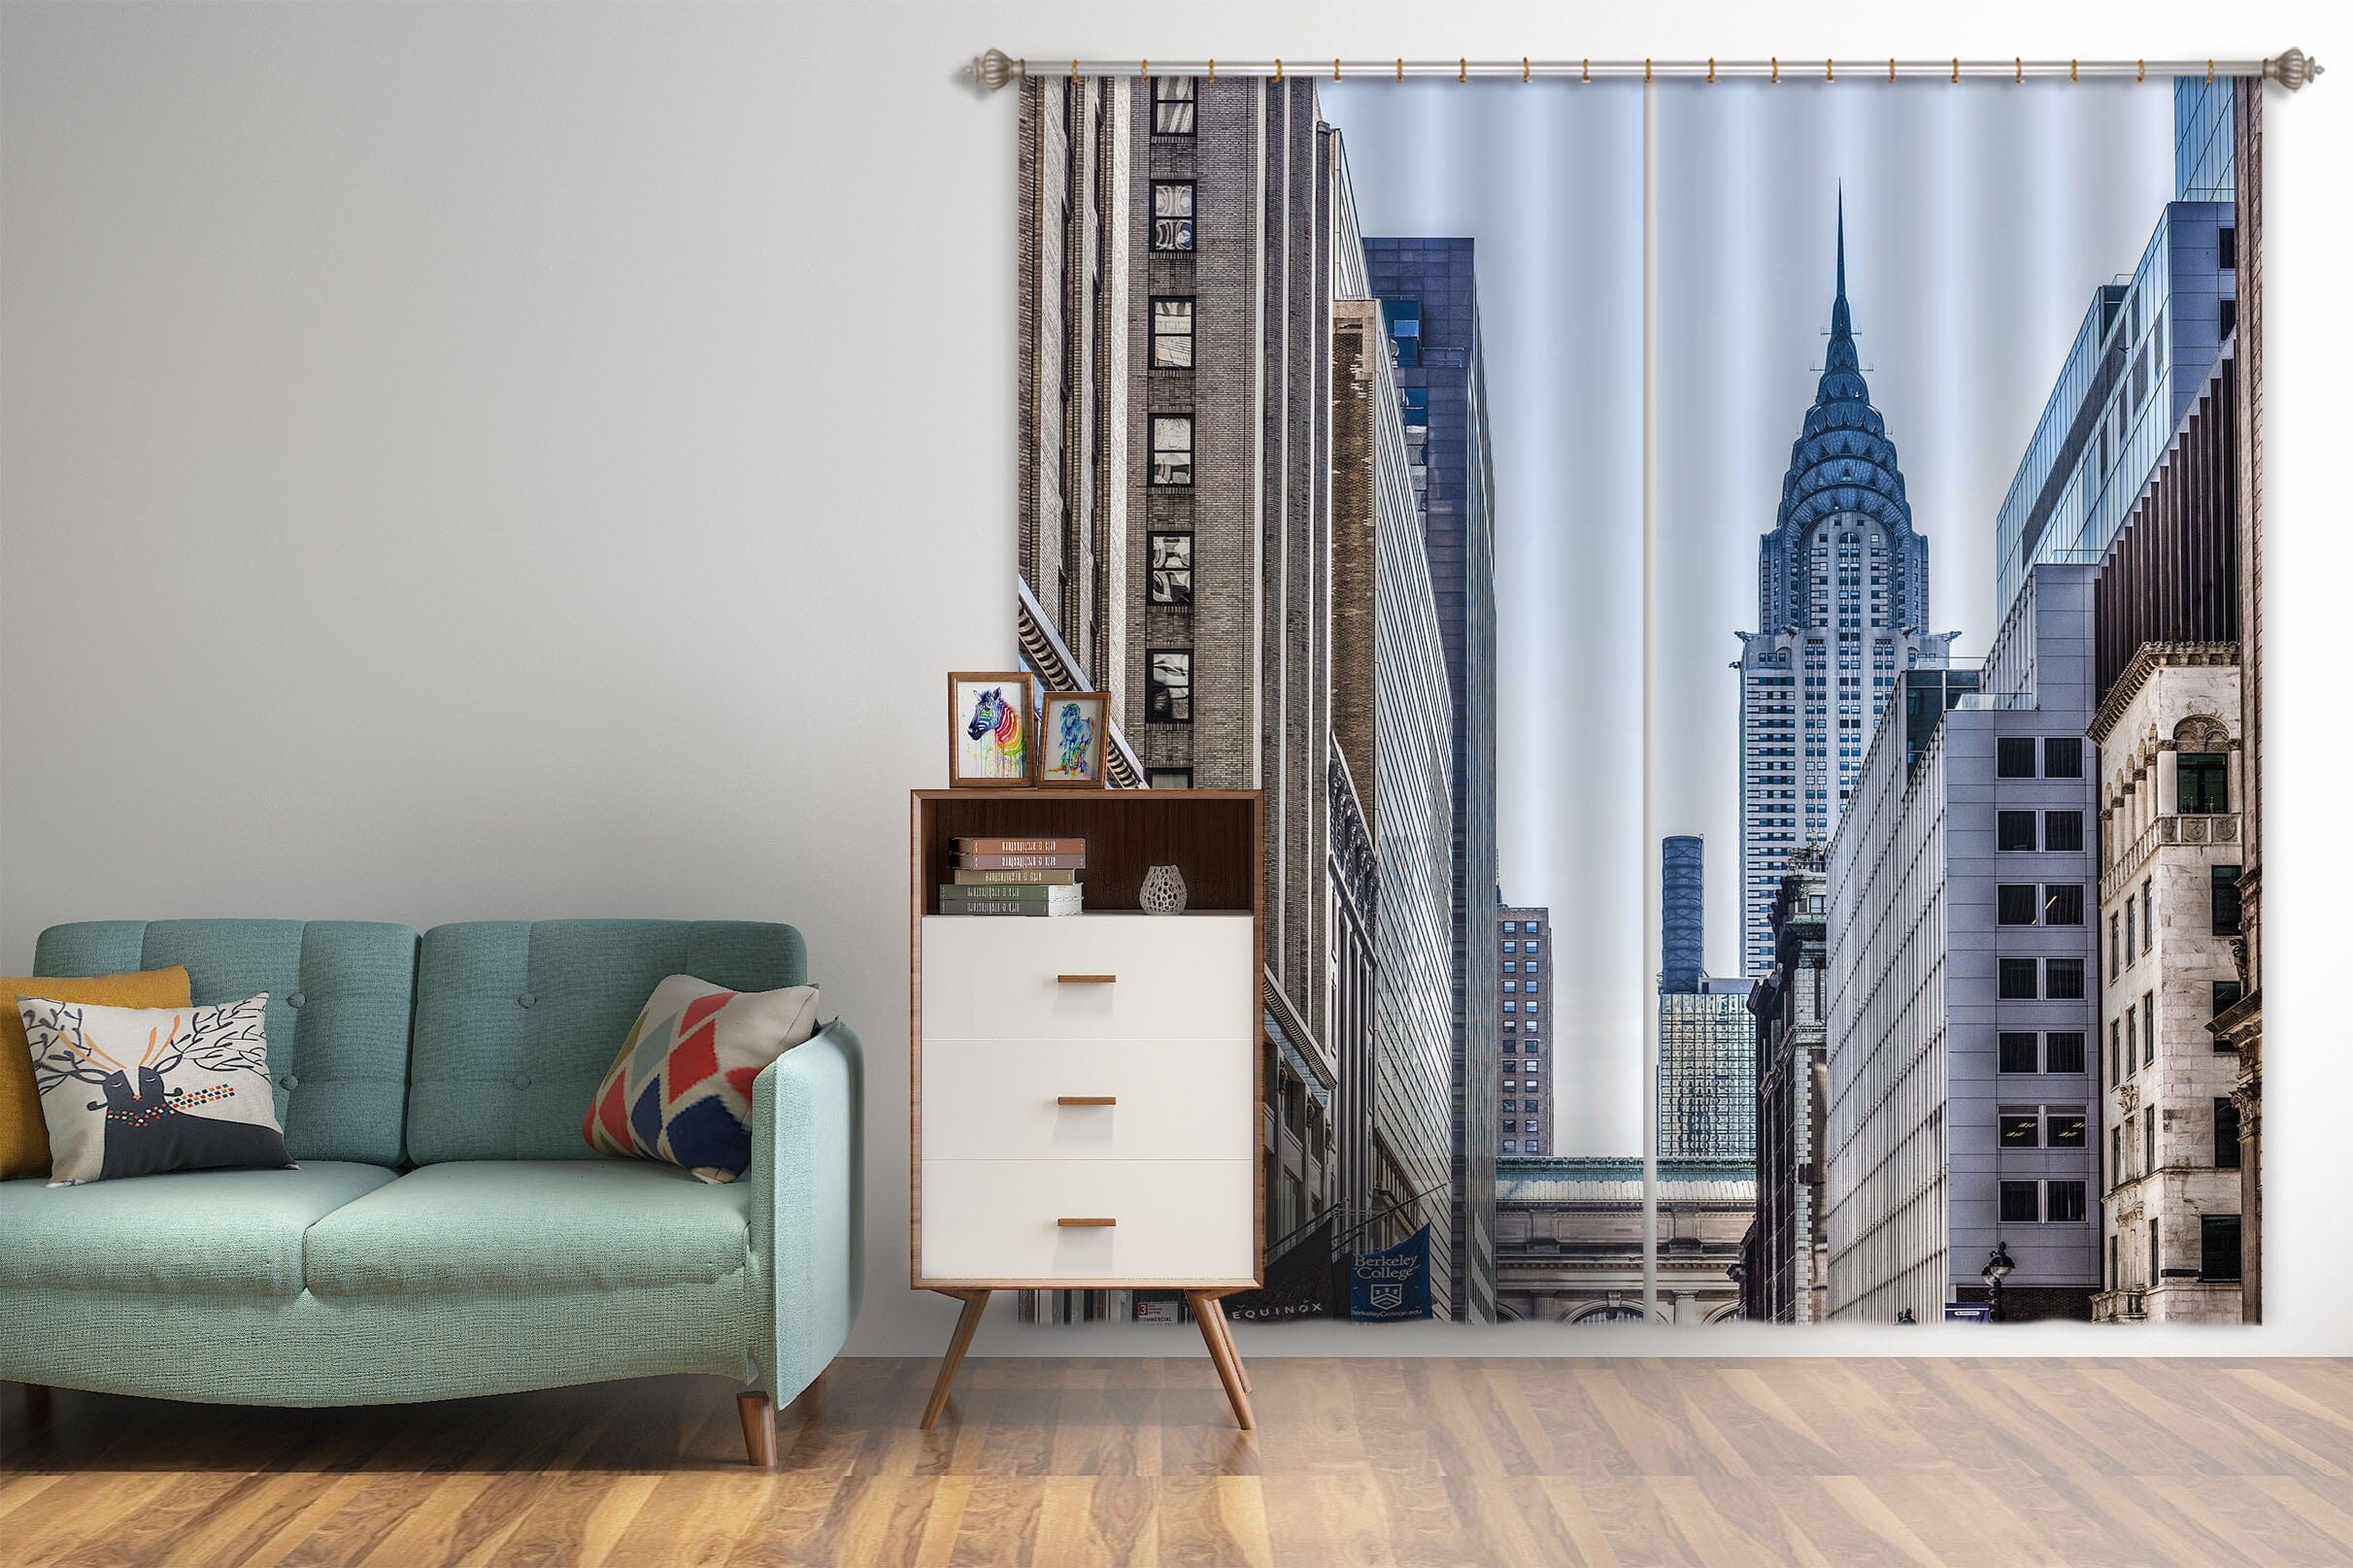 3D Tall Building 102 Marco Carmassi Curtain Curtains Drapes Curtains AJ Creativity Home 